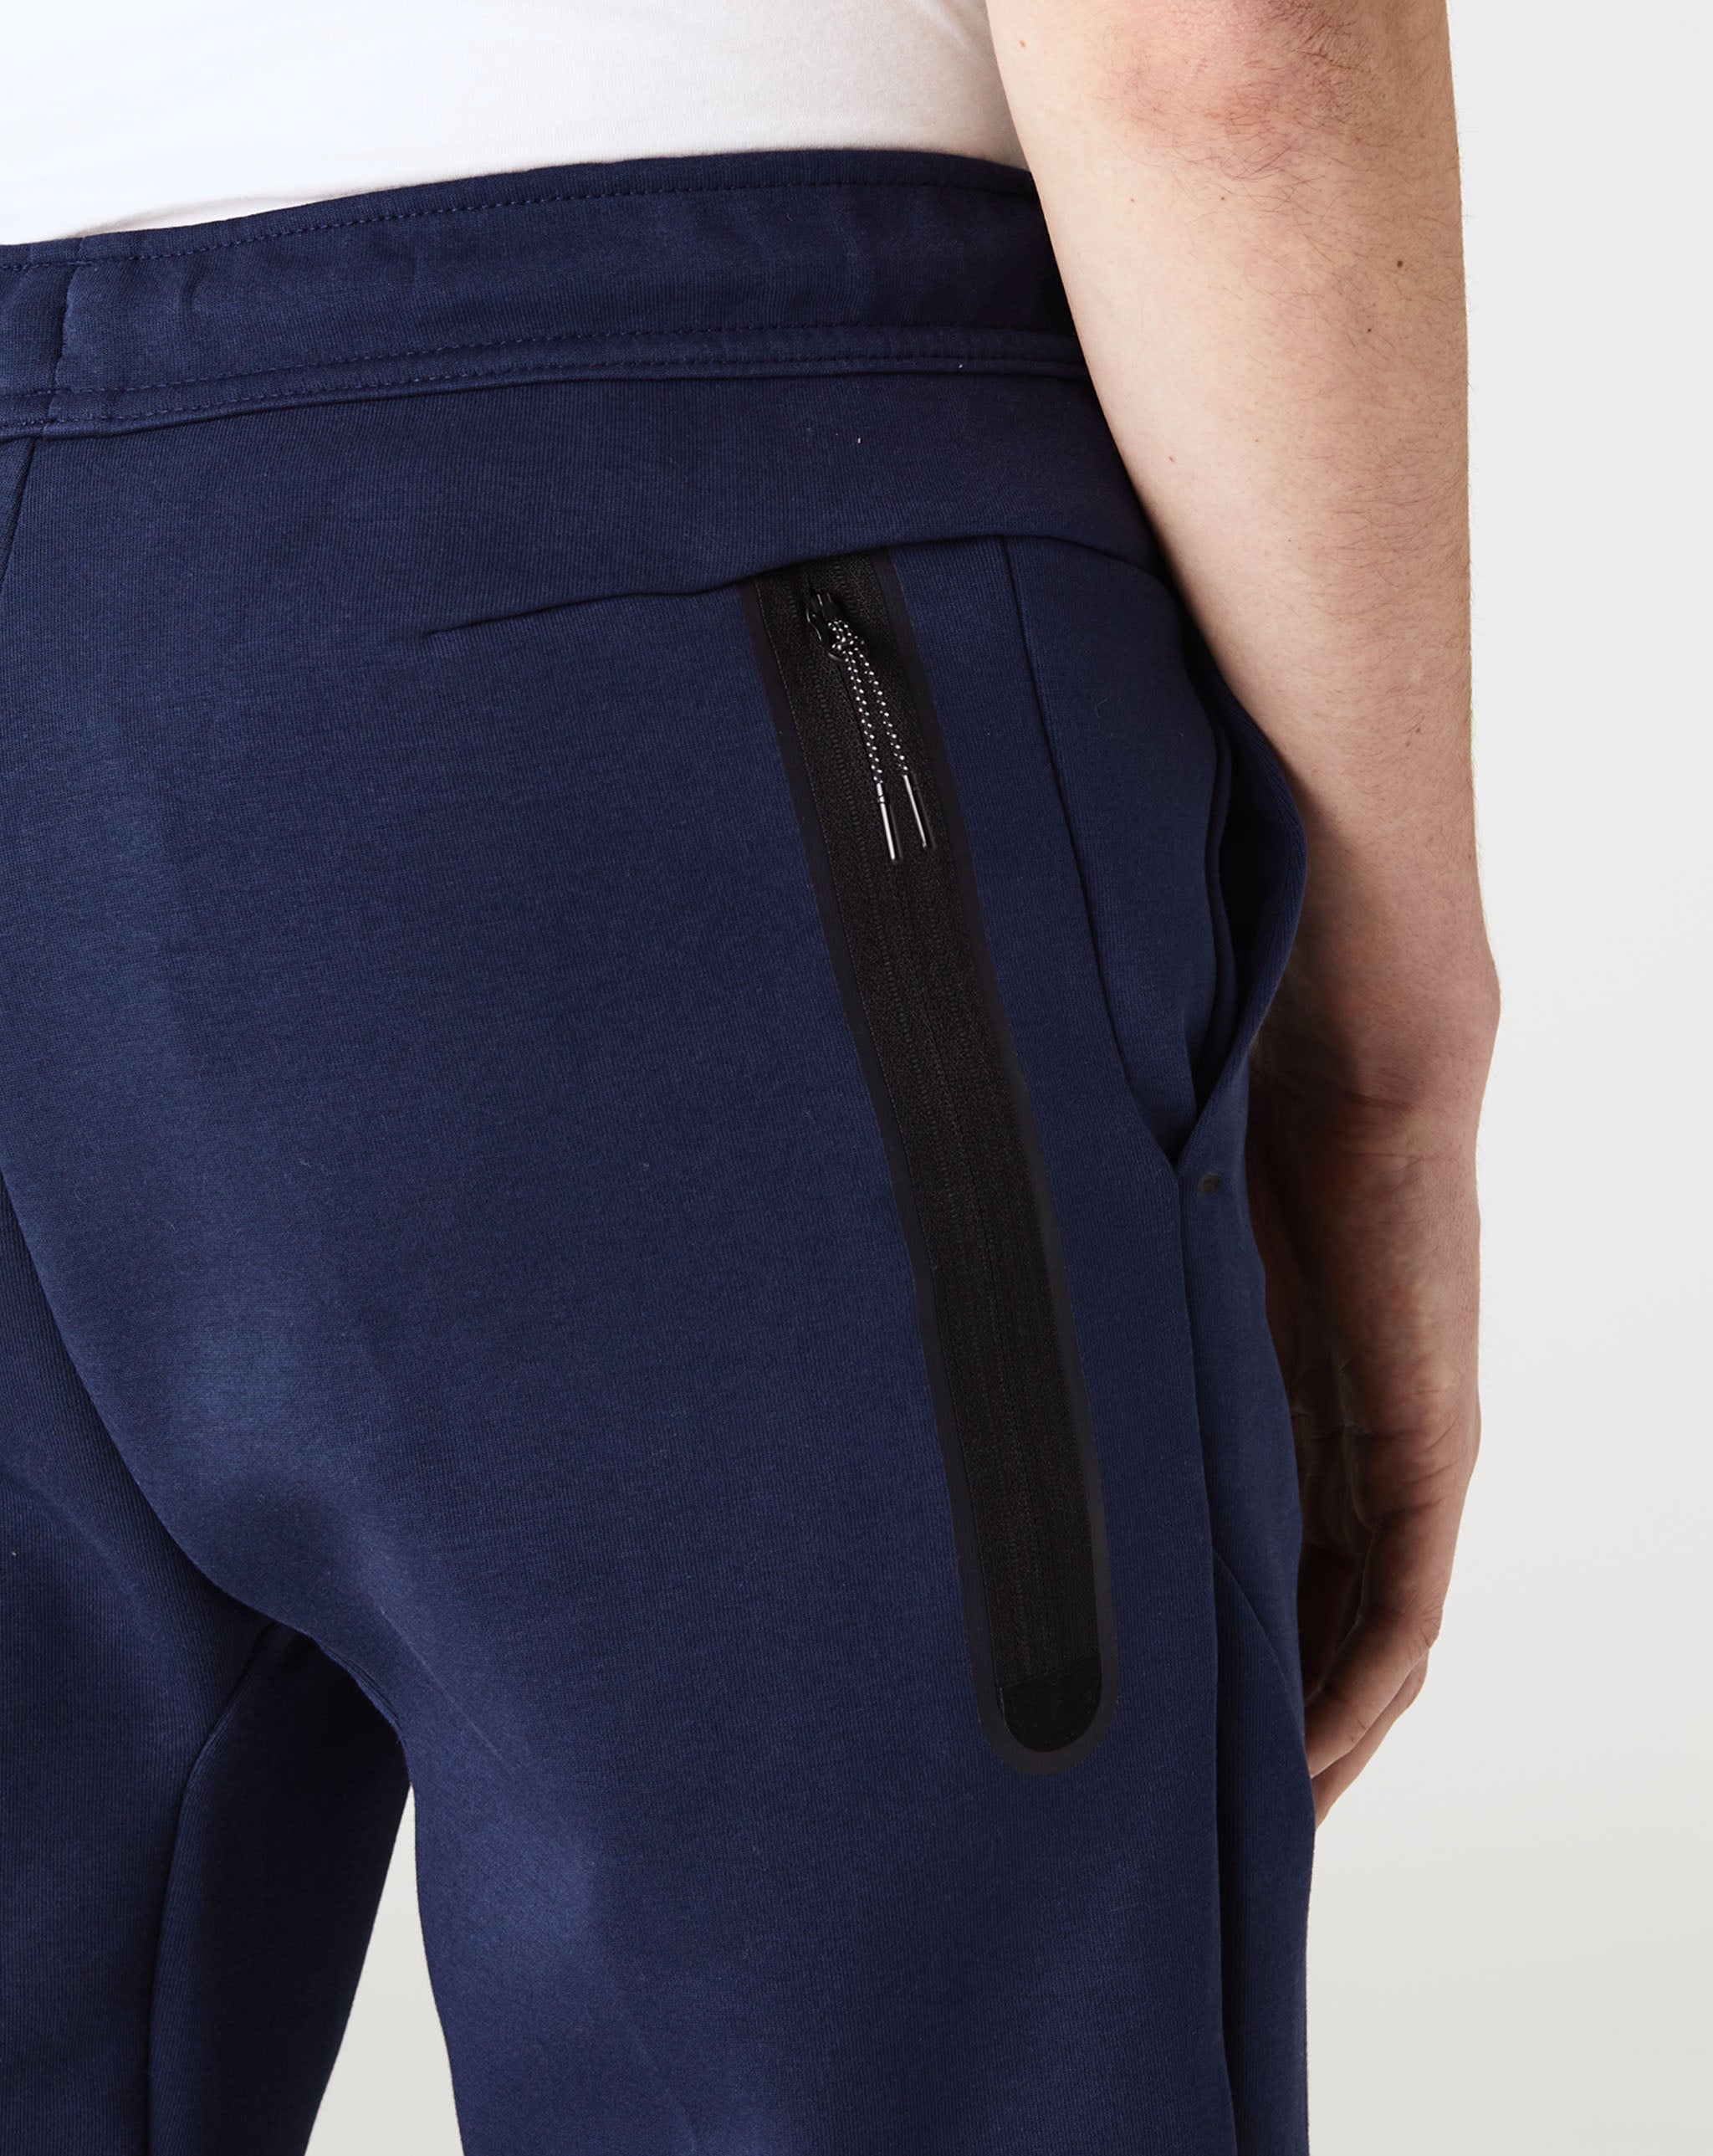 Nike Tech Fleece Pants  - XHIBITION